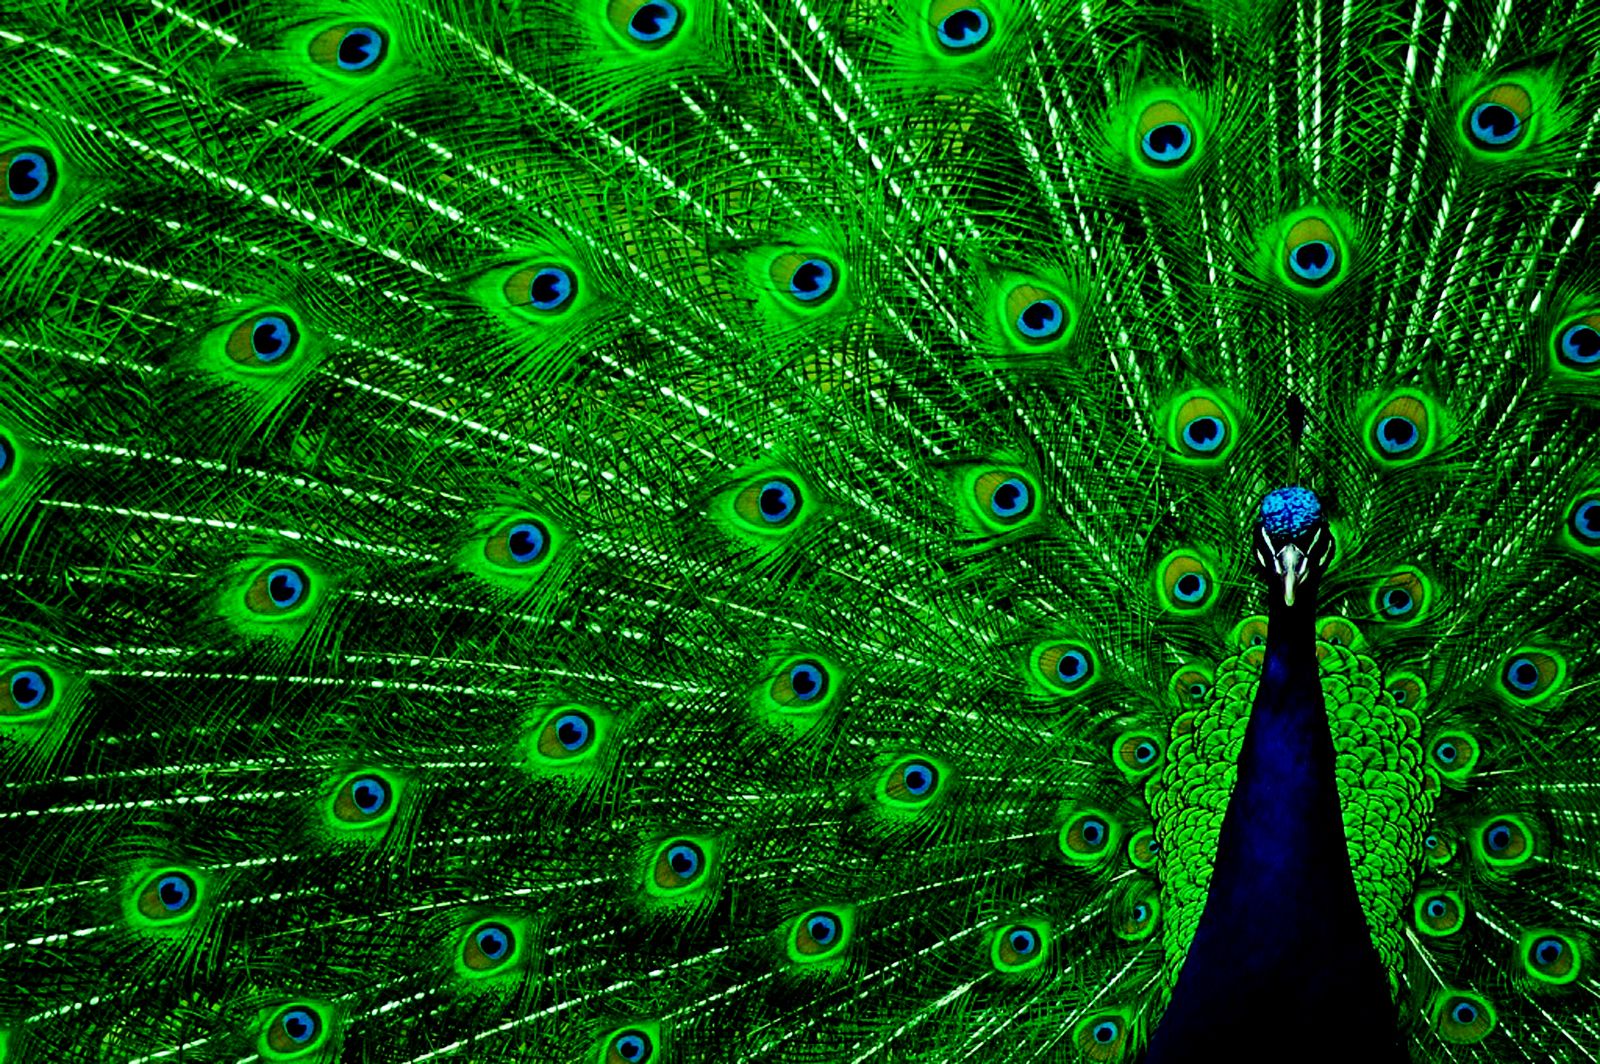 Peacock_Green_Wings_HD_Wallpaper-Vvallpaper.Net.jpg